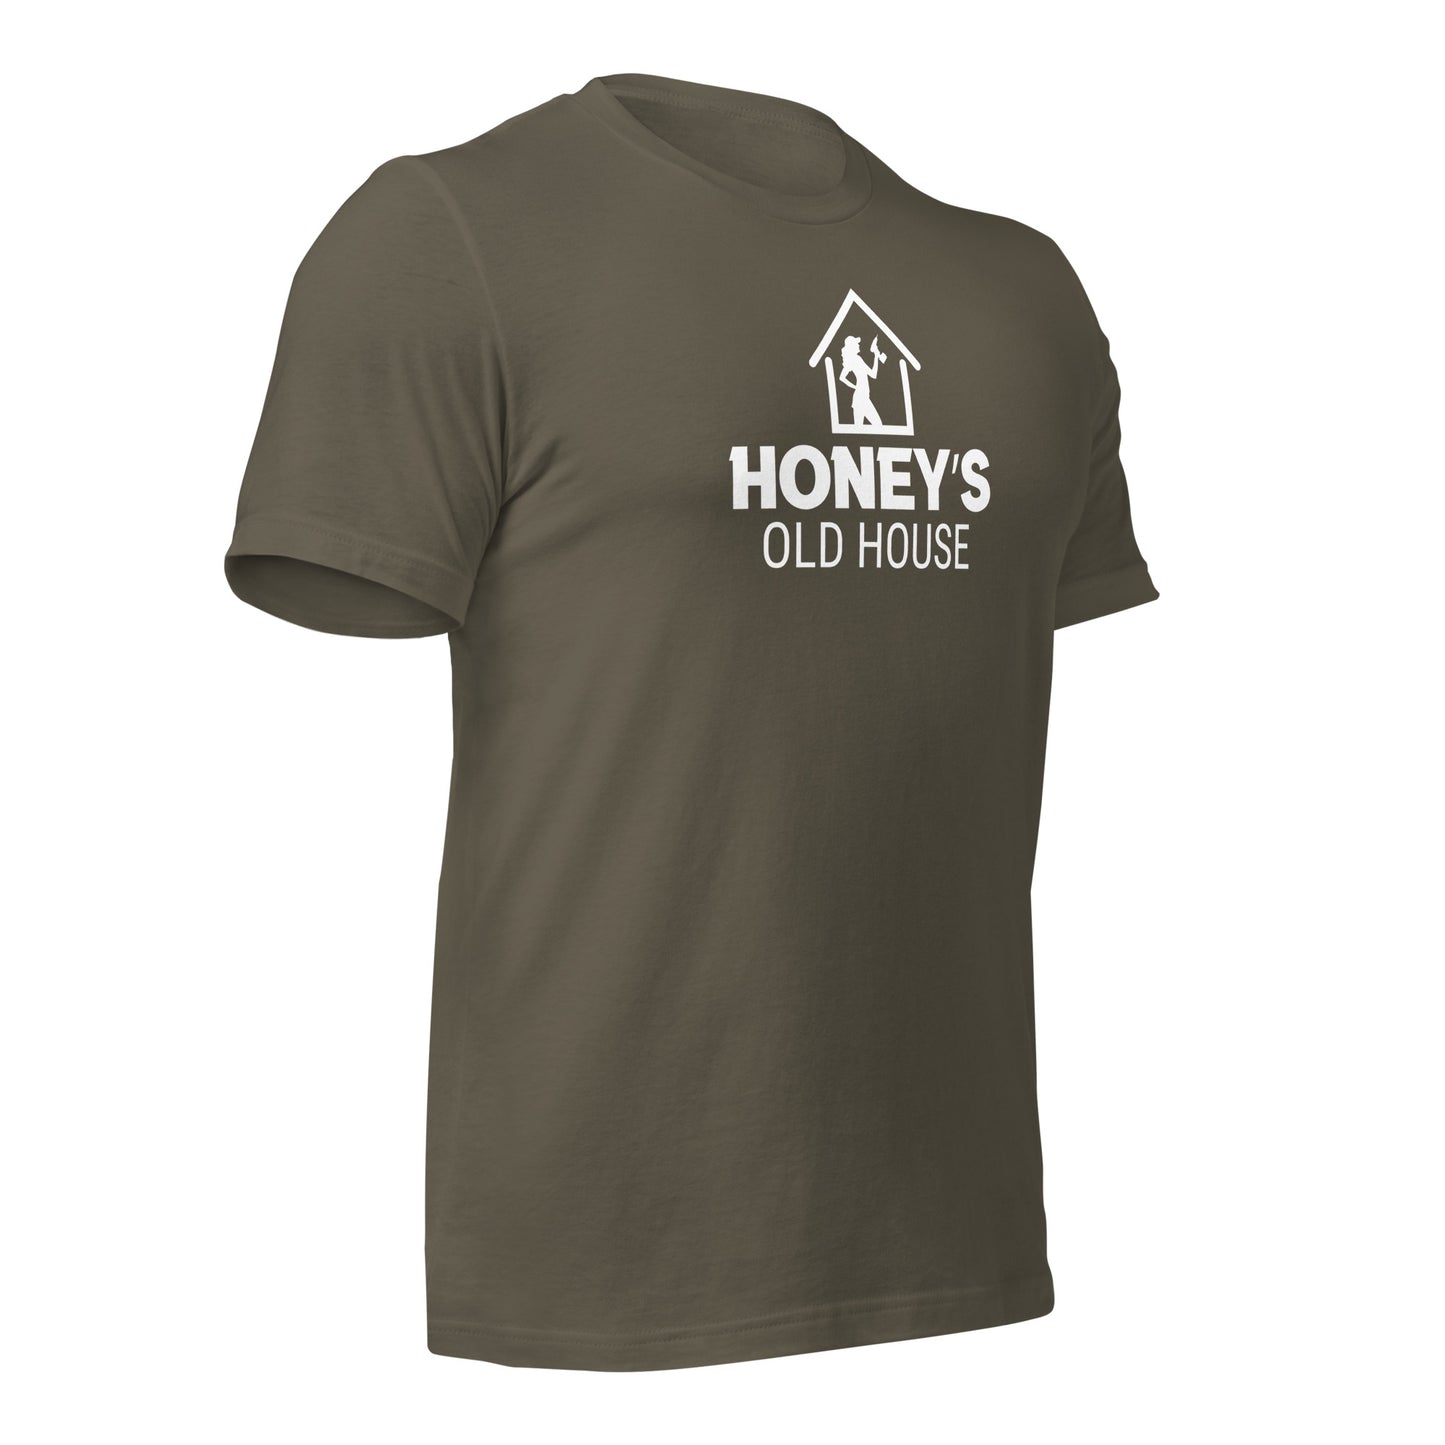 Honey's Old House t-shirt